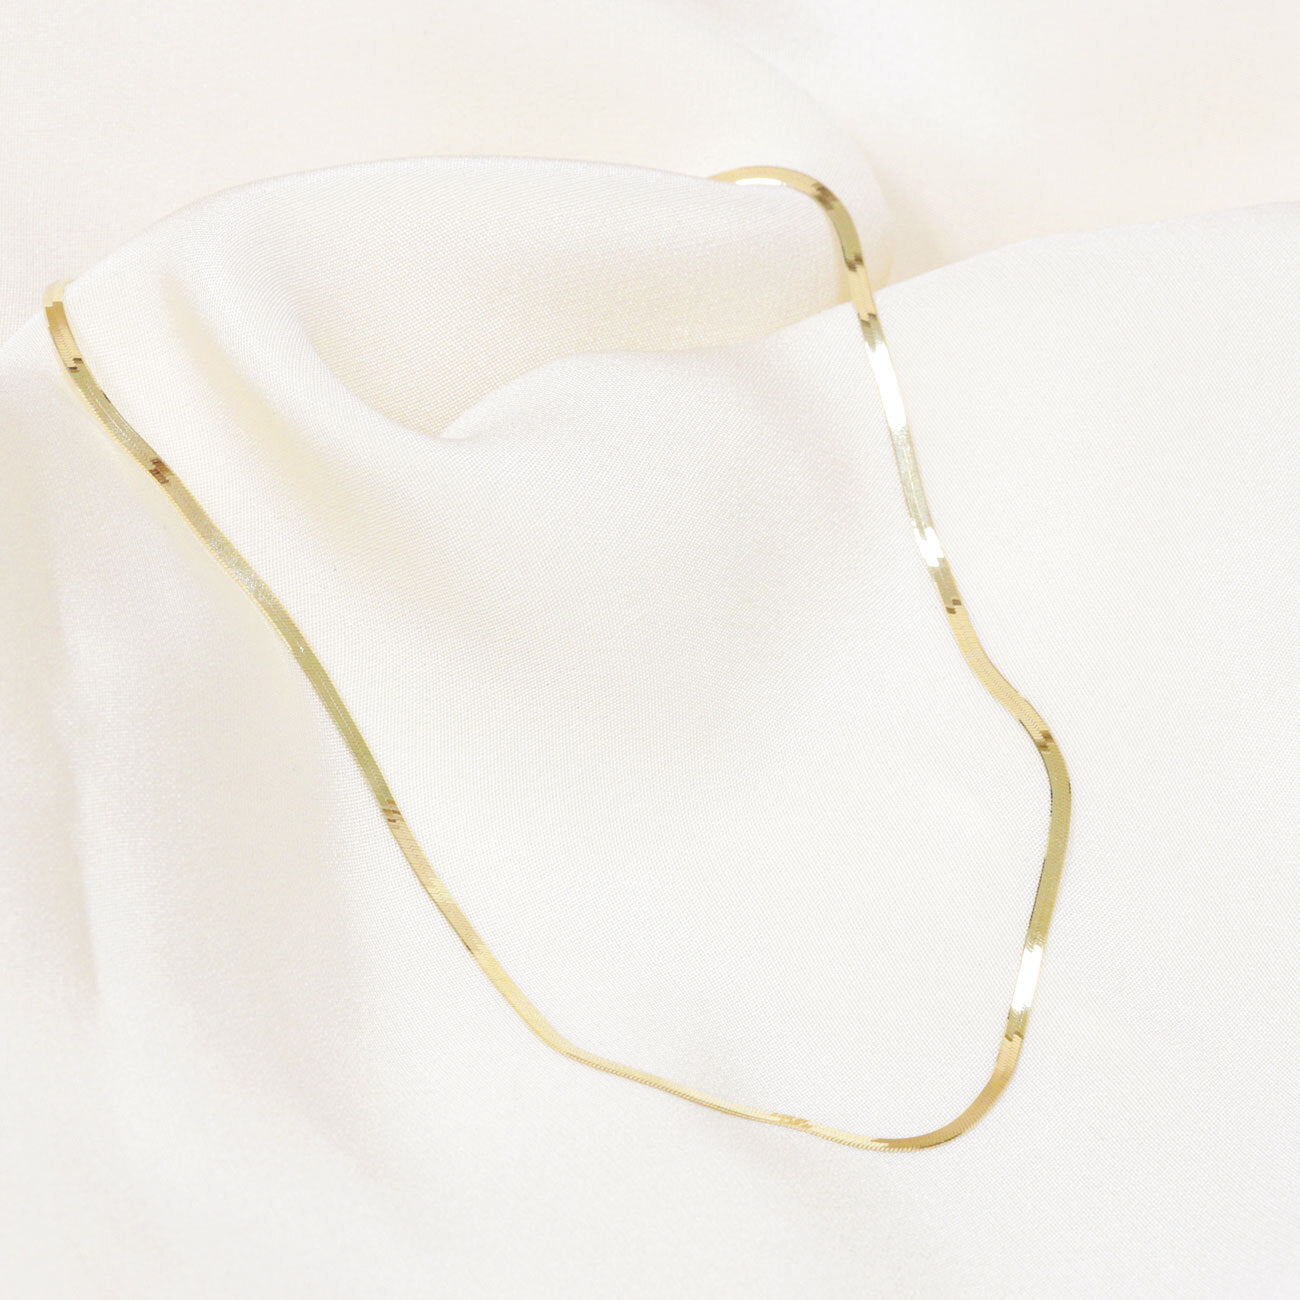 Thin Herringbone Necklace in Gold Super Short (36cm)